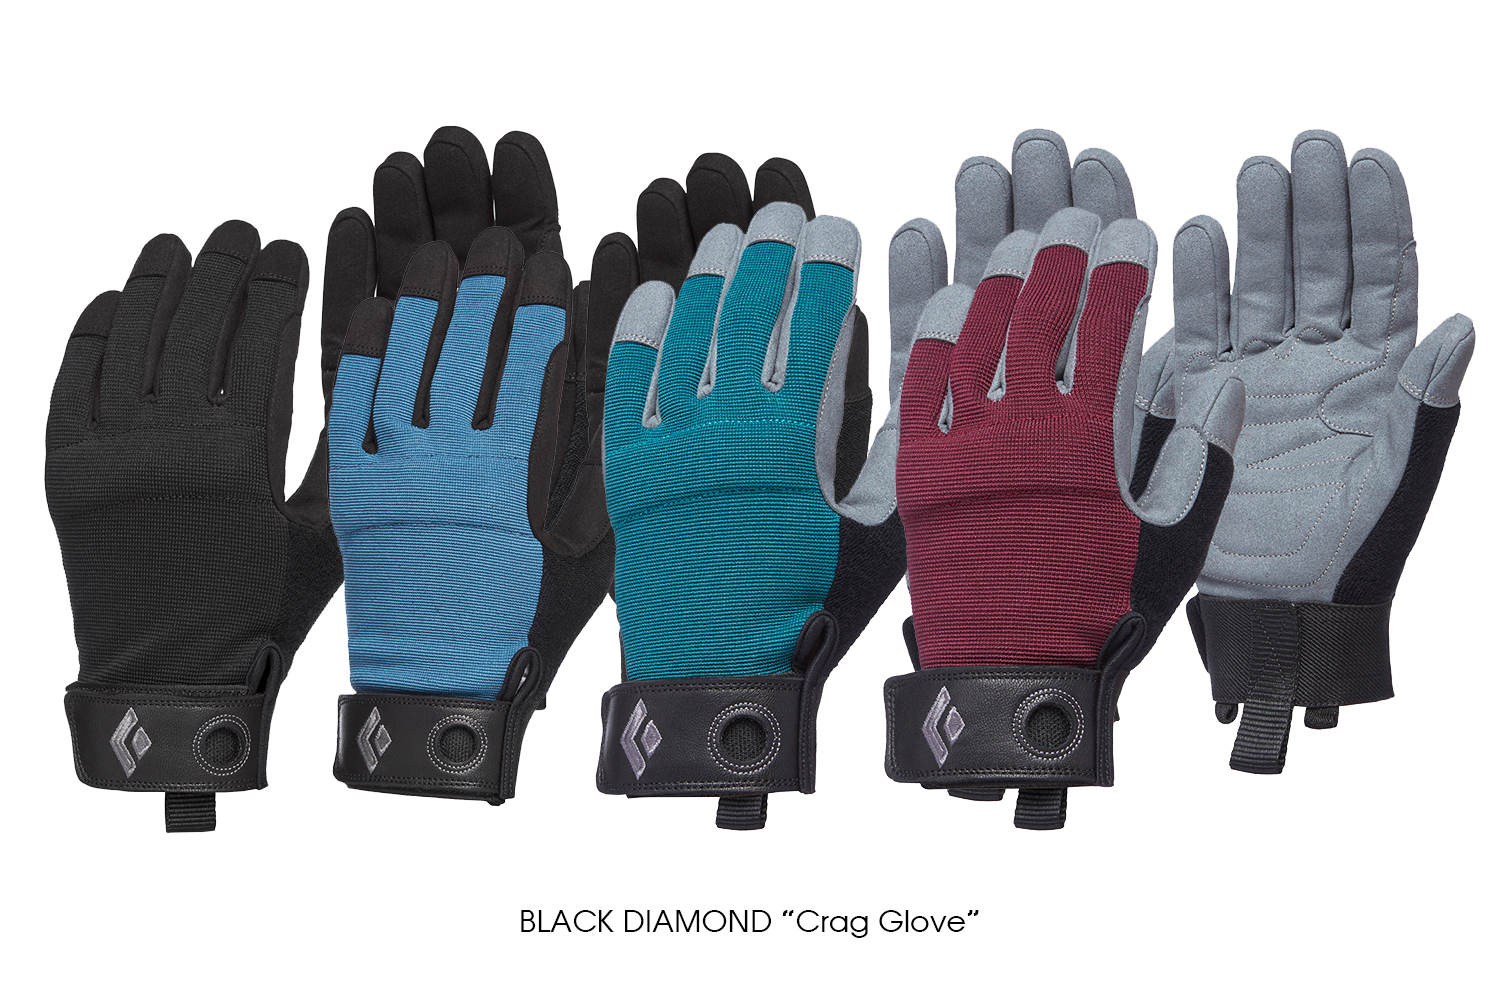 BLACK DIAMOND "Crag Gloves"